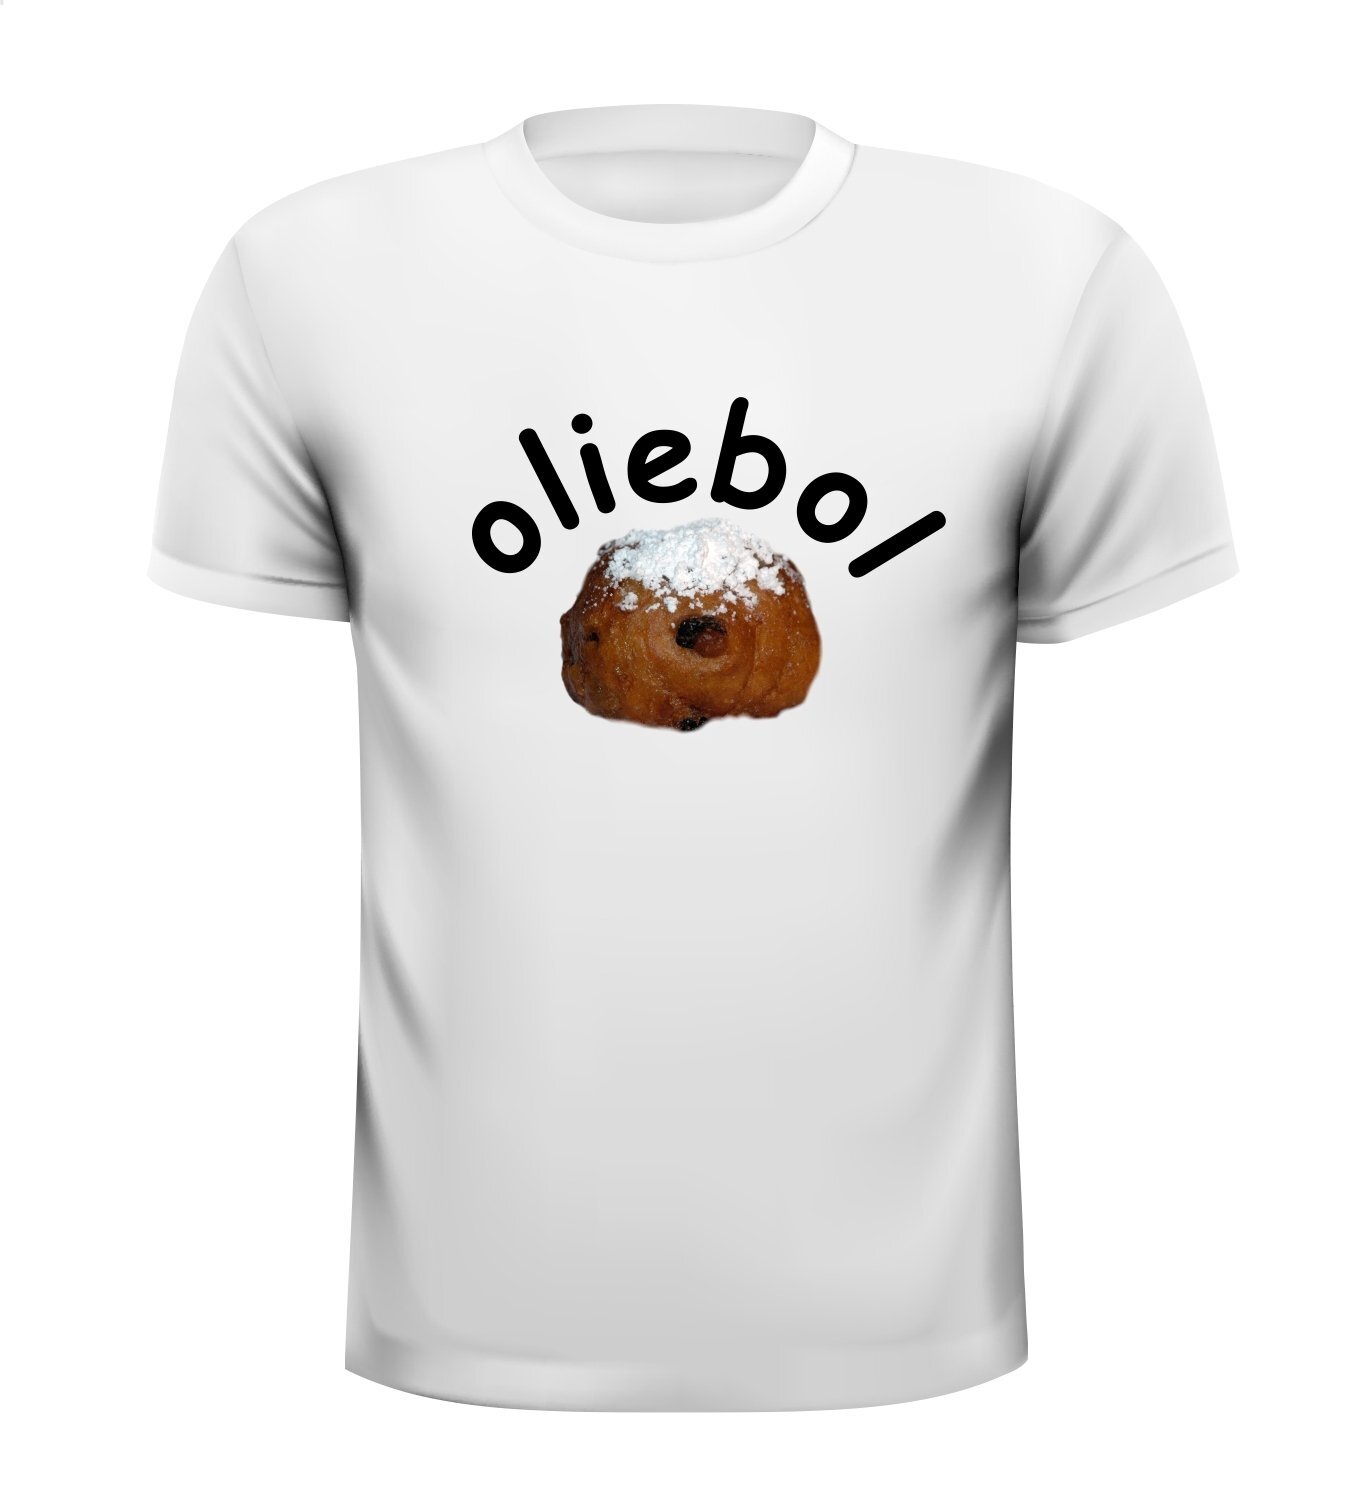 oliebol T-shirt